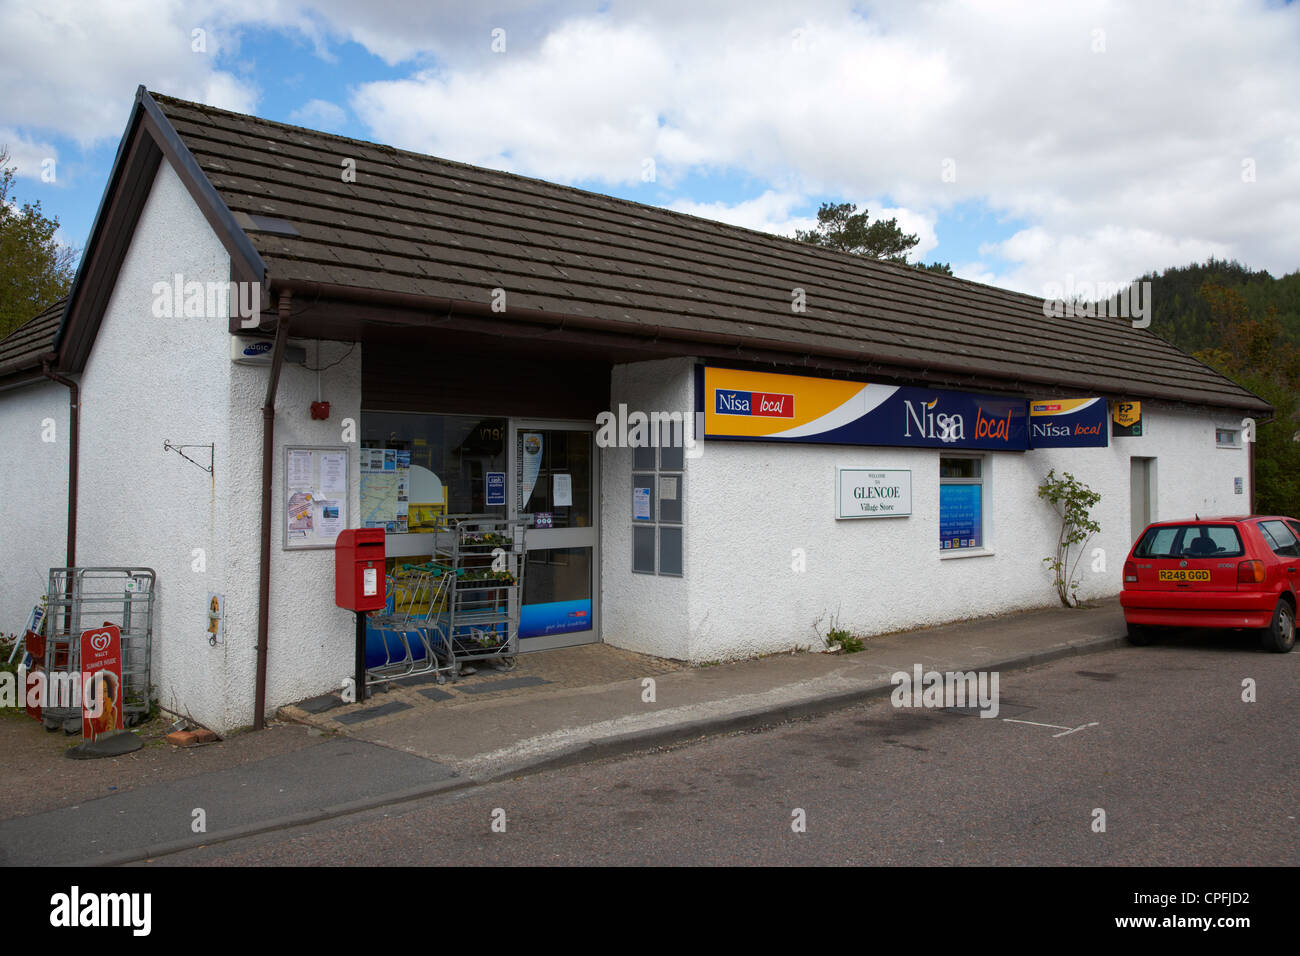 nisa local small shop in Glencoe highlands scotland uk Stock Photo